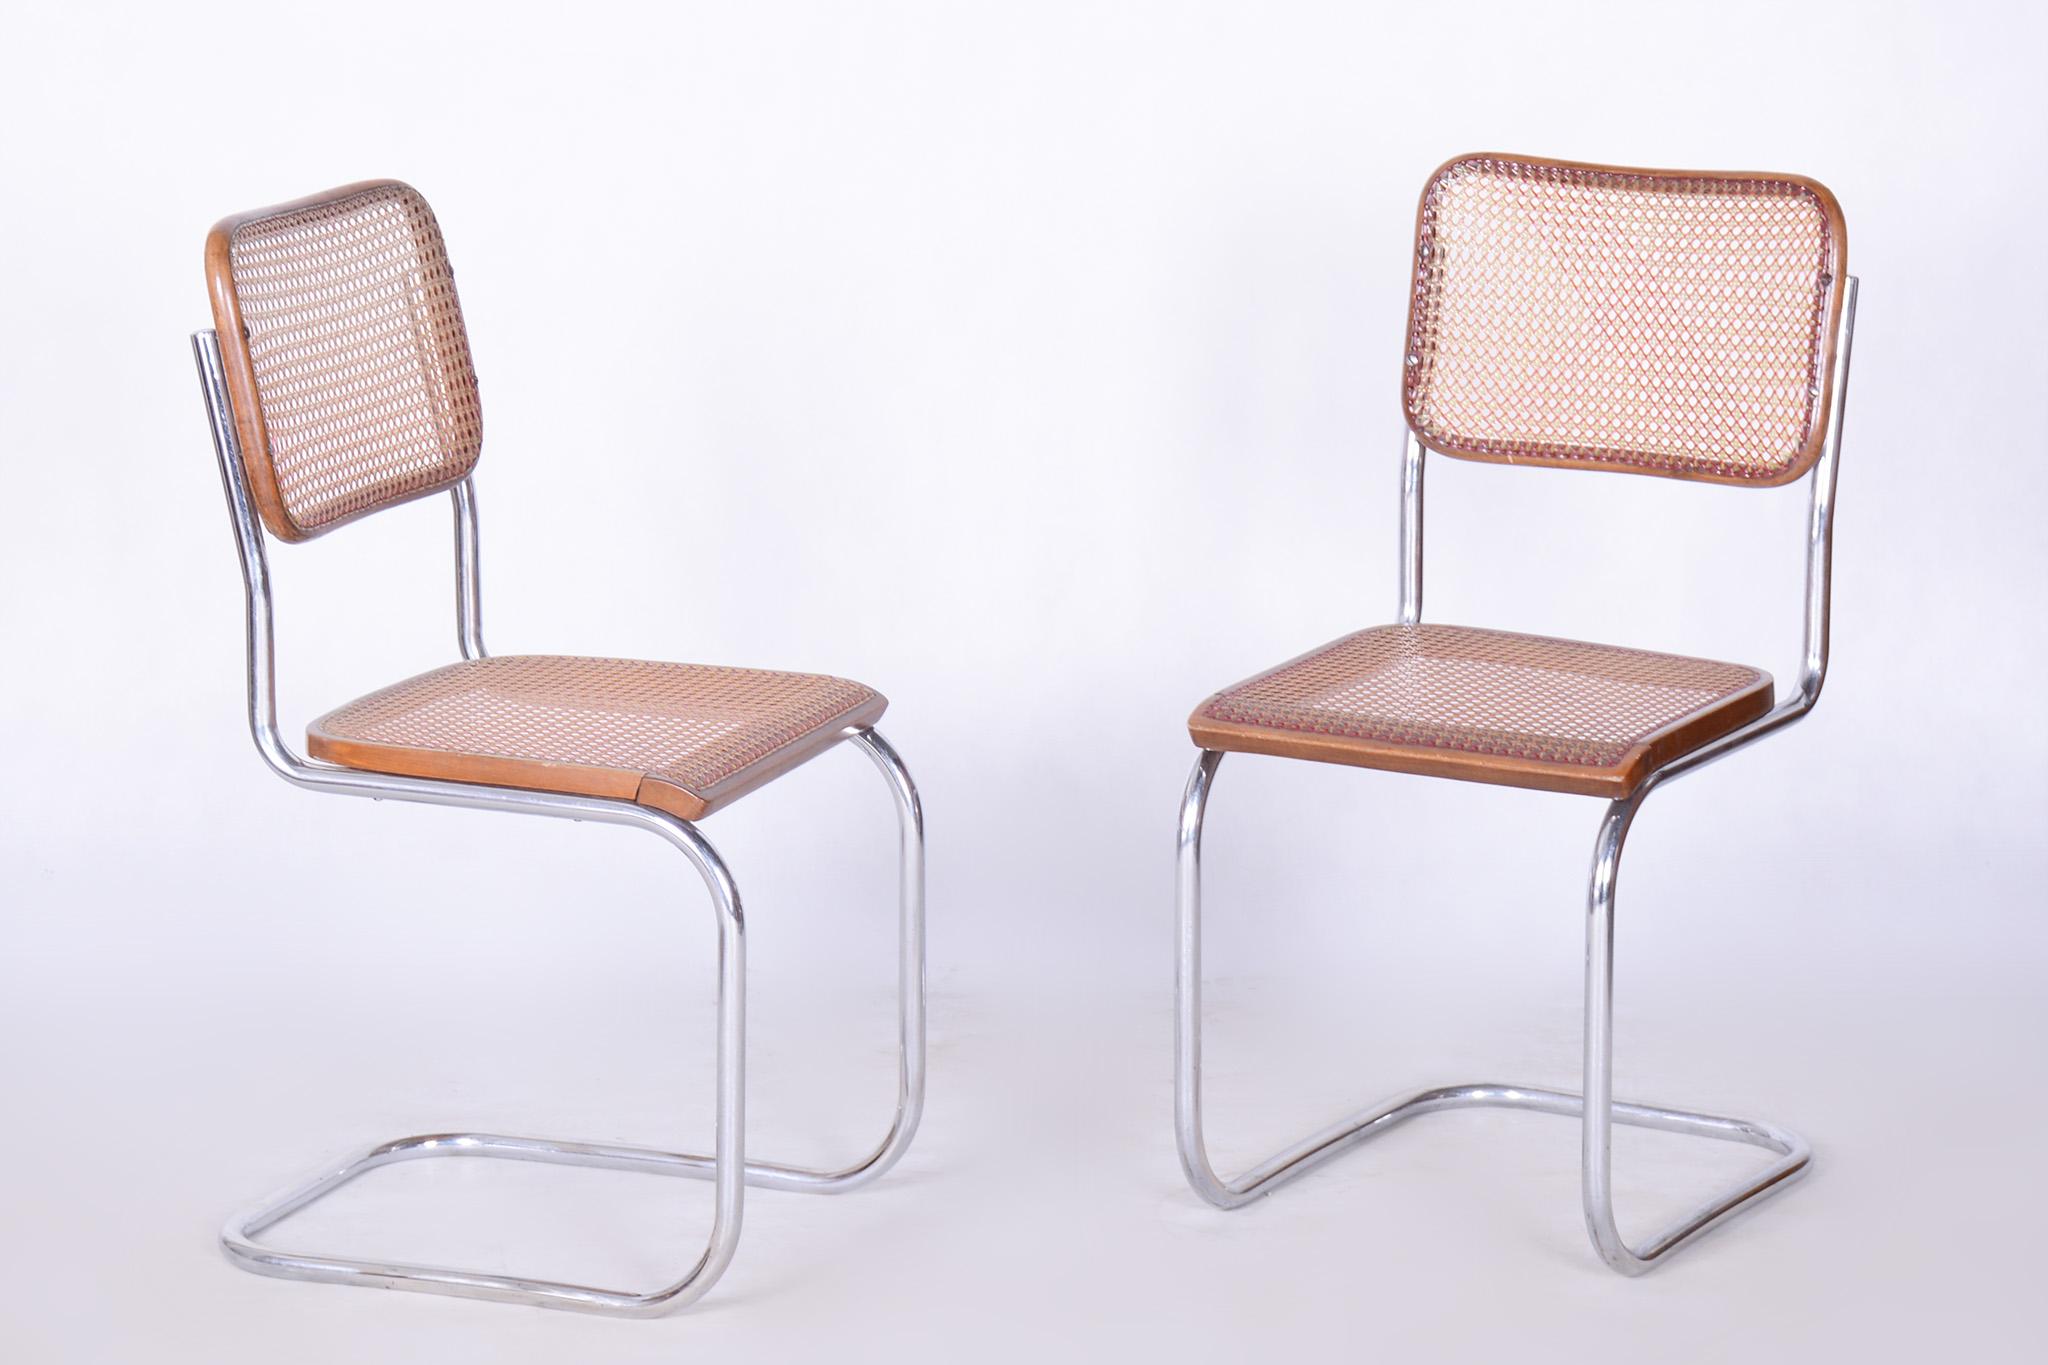 Restored Bauhaus Pair of Chairs, Robert Slezak, Chrome, Beech, Czechia, 1930s For Sale 5